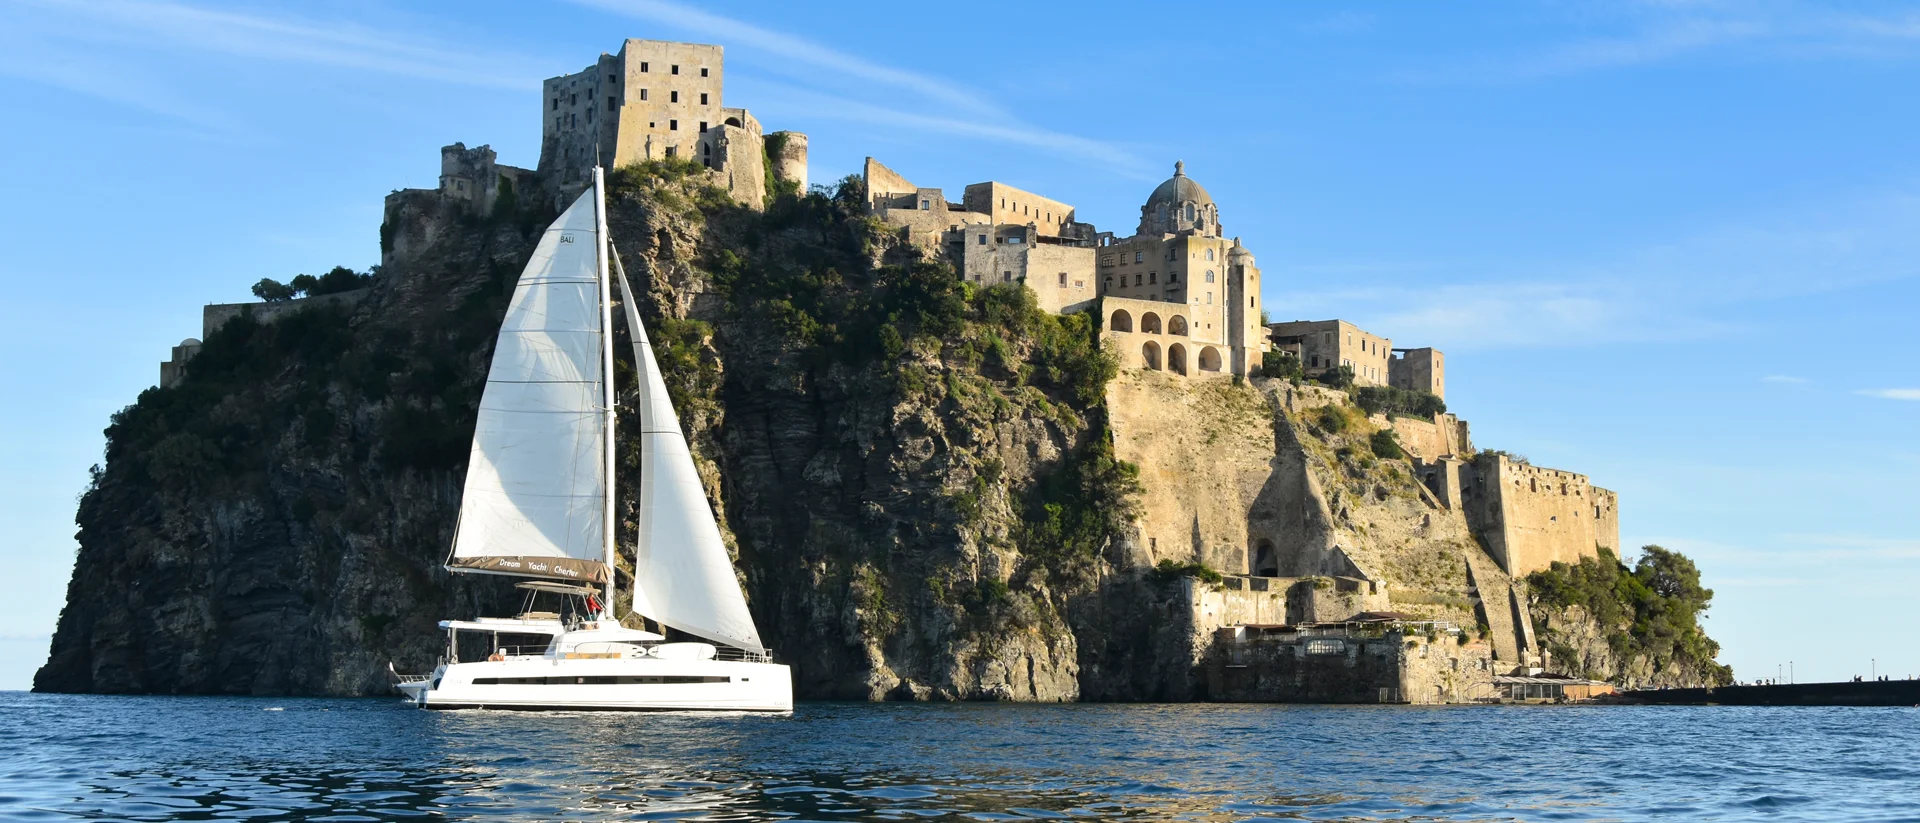 Neapel, Segeln, Insel, antike Architektur, Segelboot, Charter